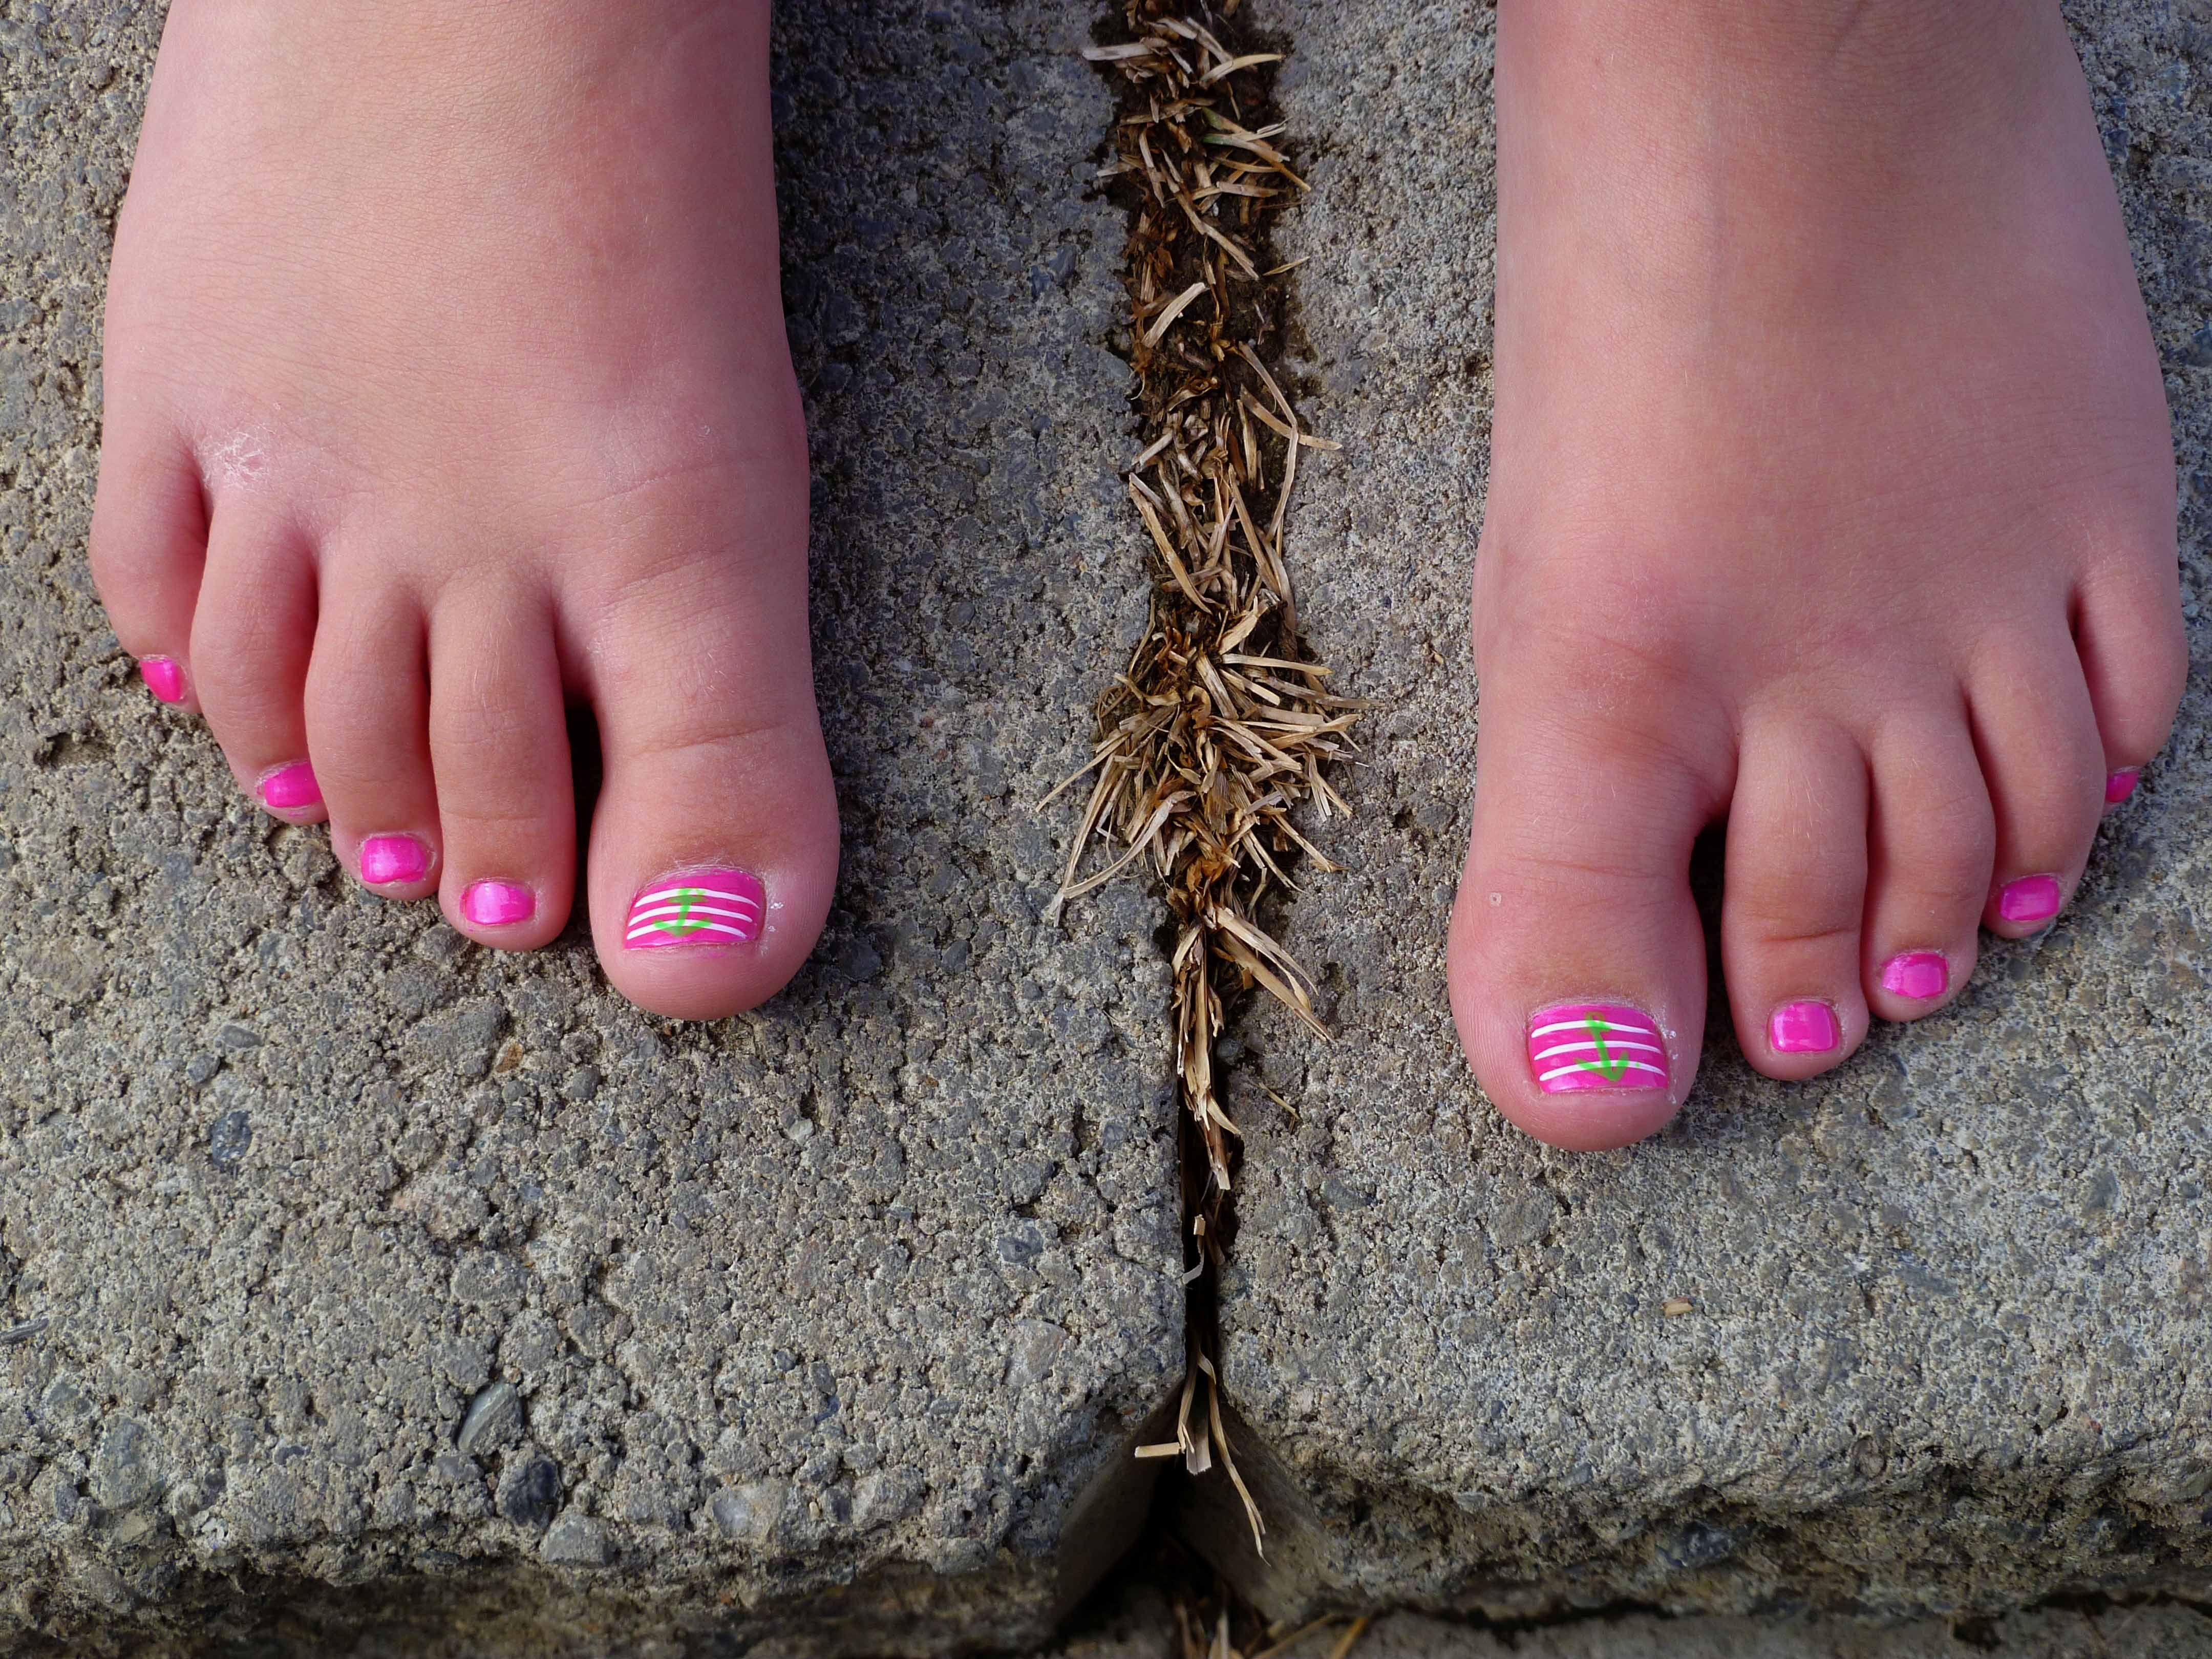 Painted feet